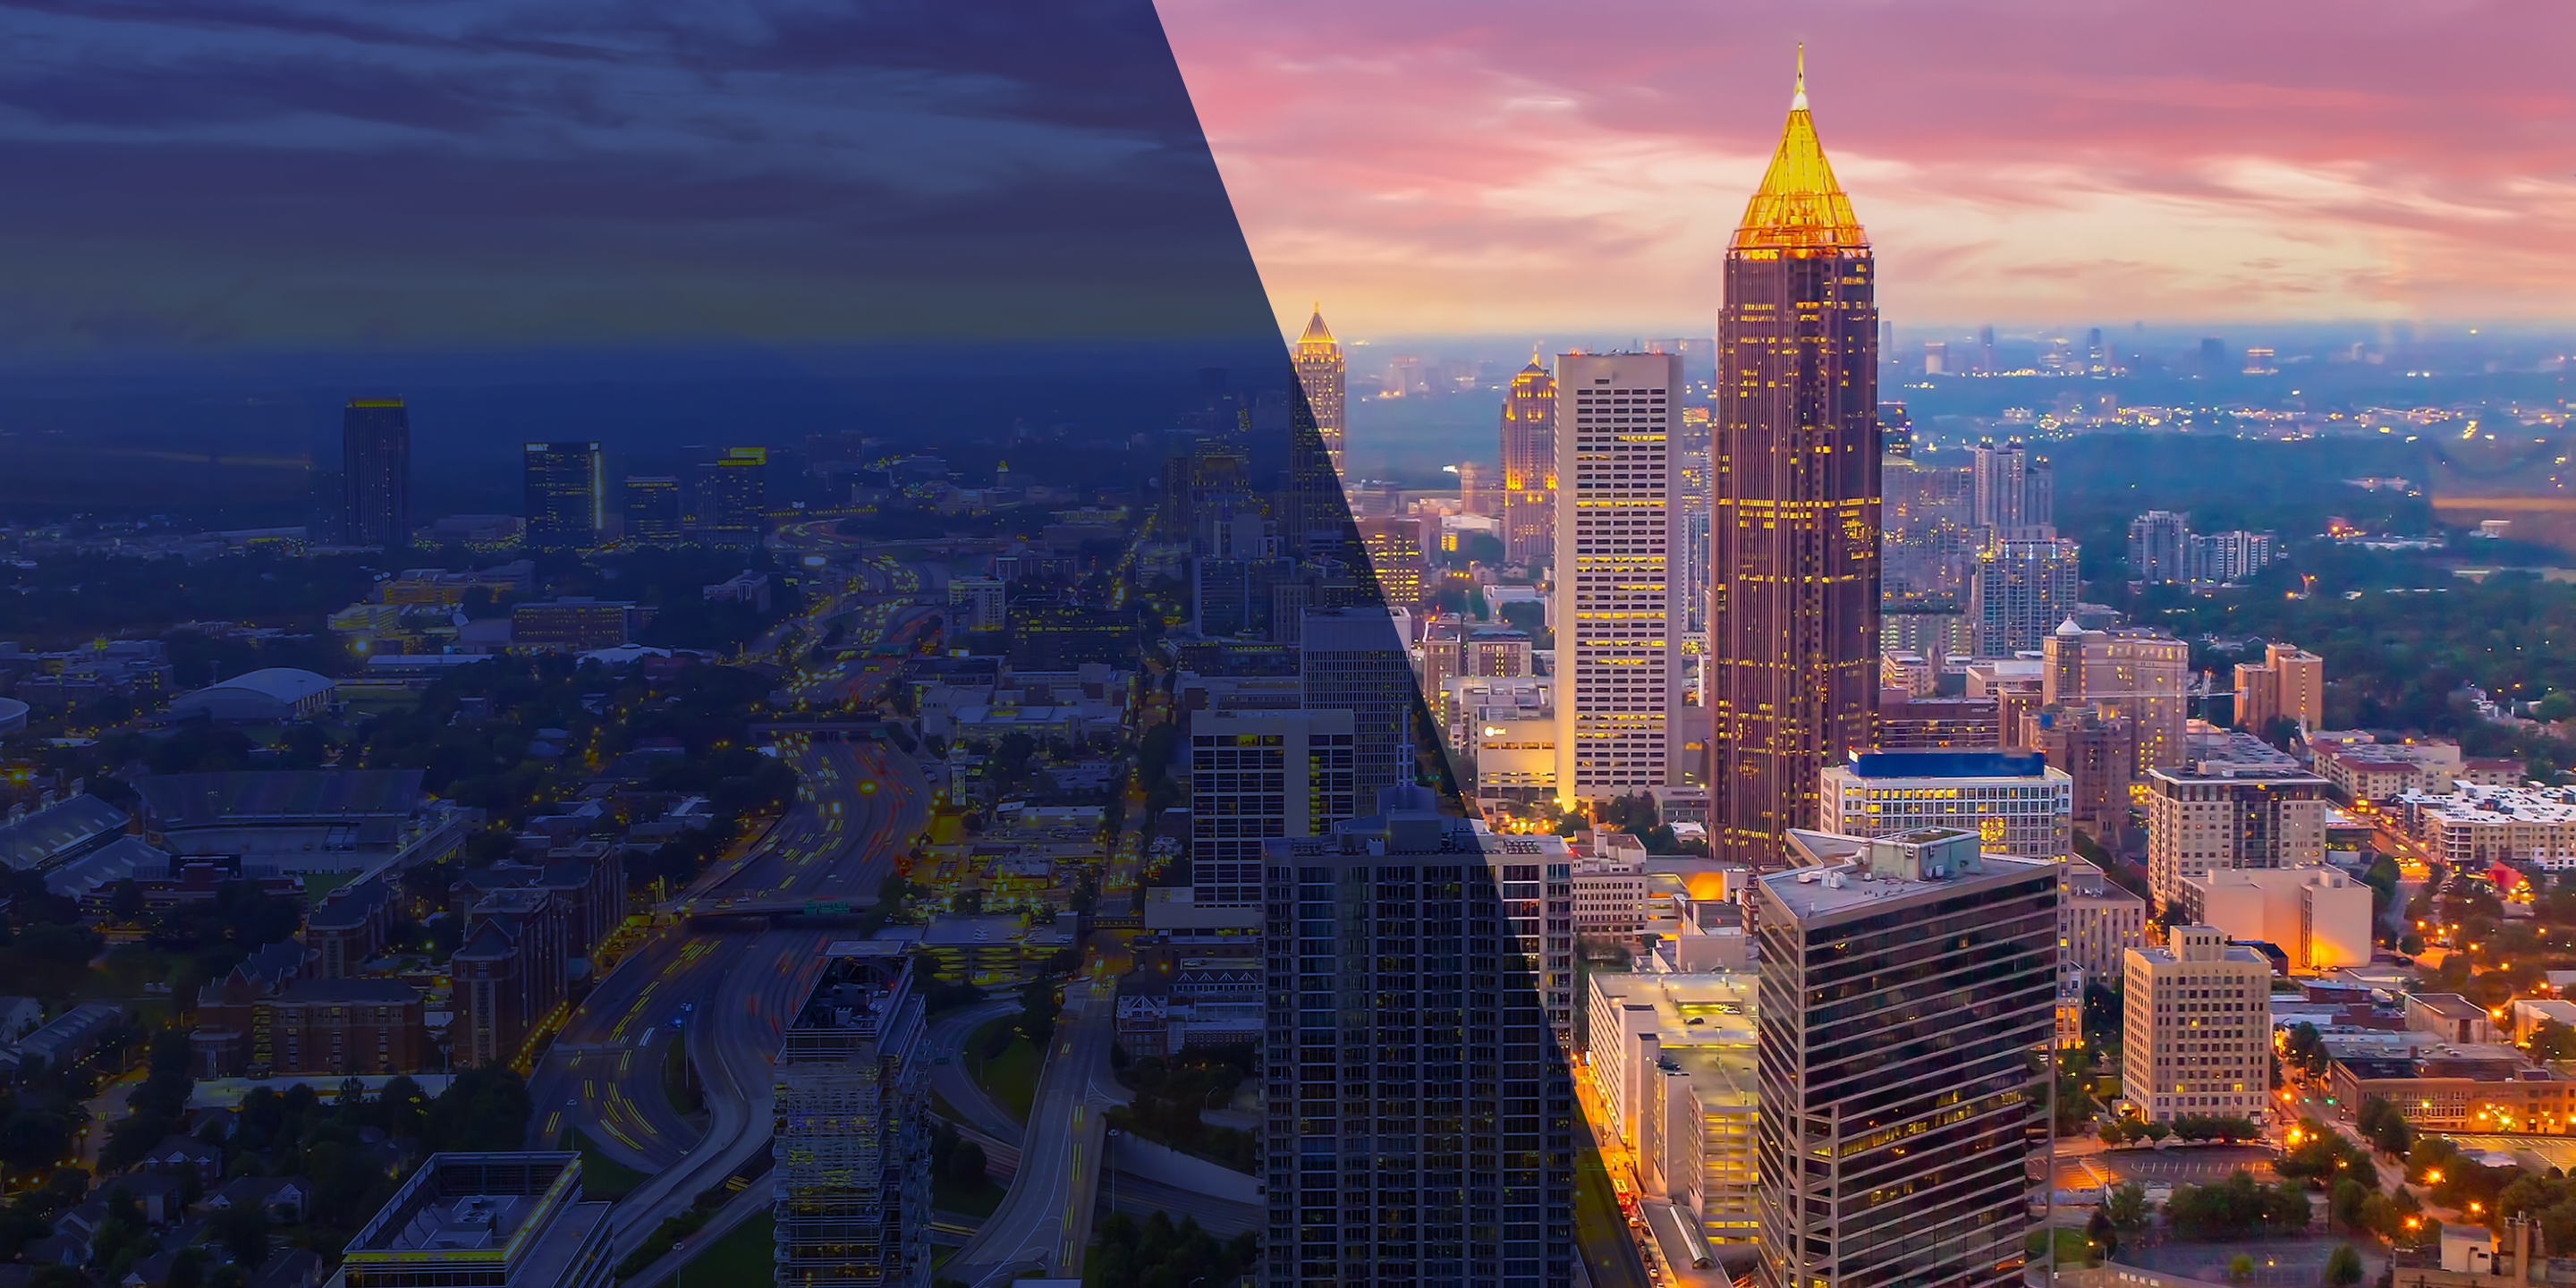 The Atlanta skyline from the air. 